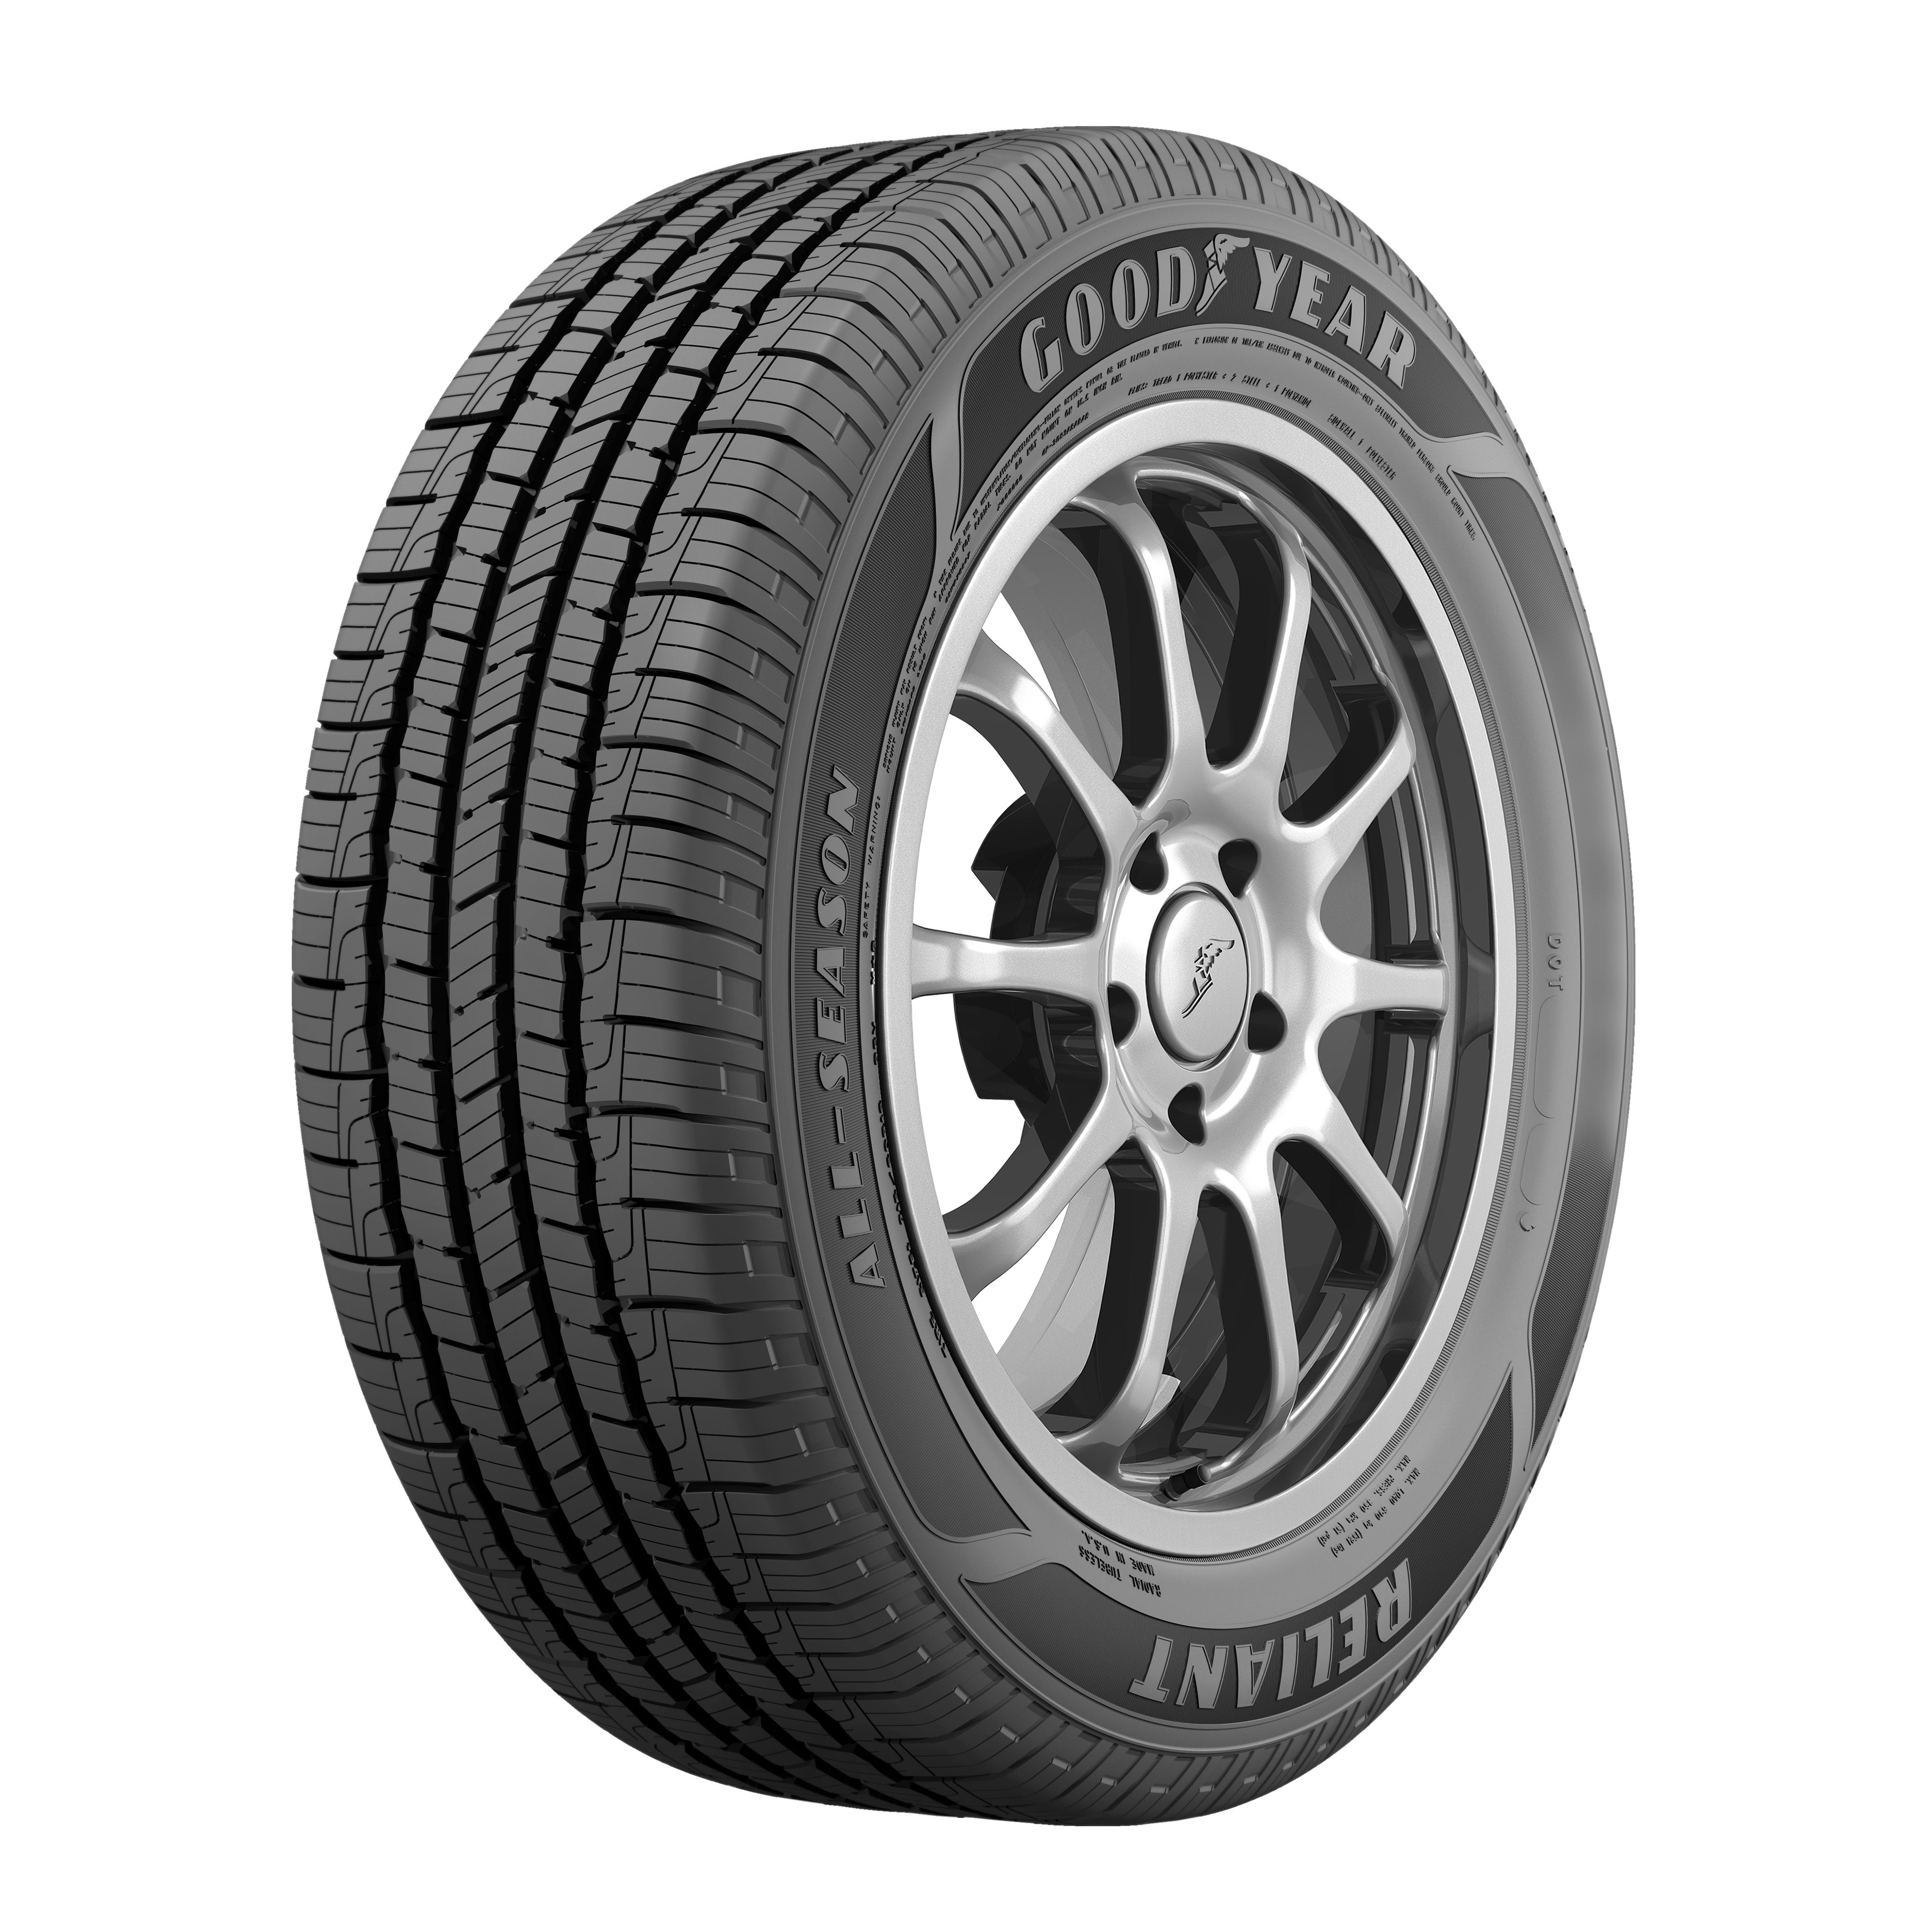 Goodyear Reliant All-Season 195/60R15 88V All-Season Tire